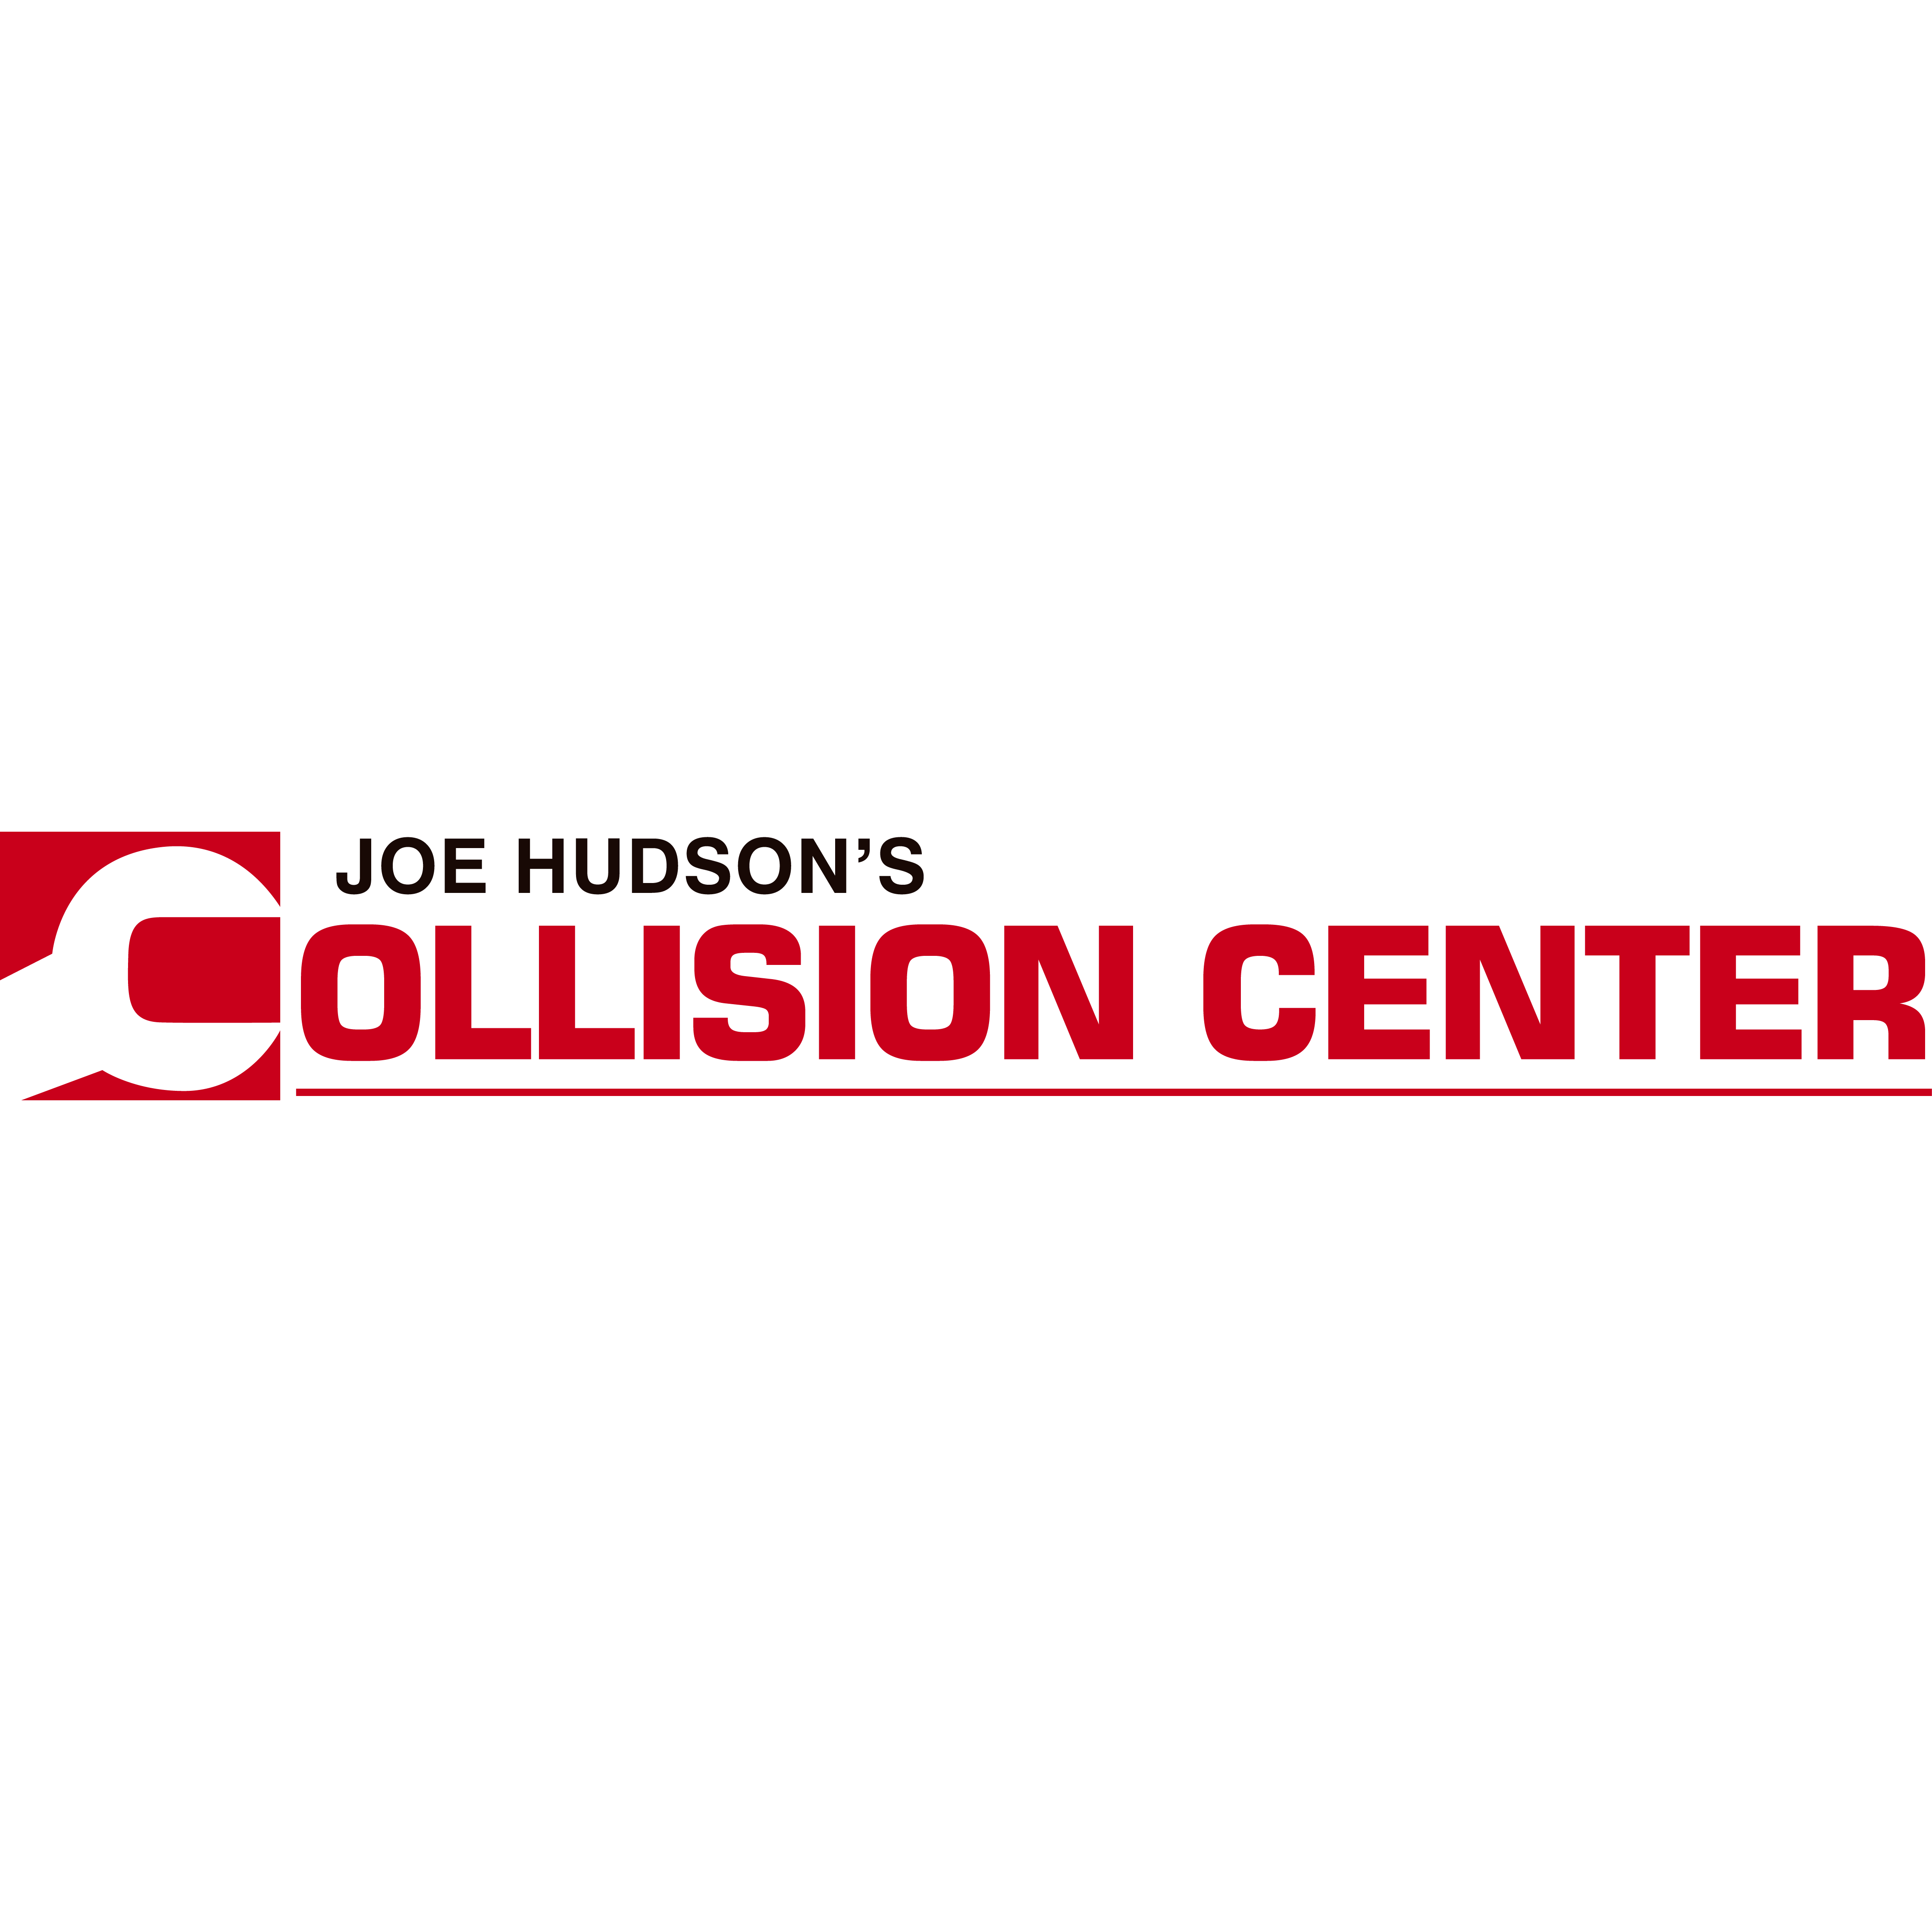 Joe Hudson's Collison Center - Lawton, OK 73501 - (580)355-1575 | ShowMeLocal.com